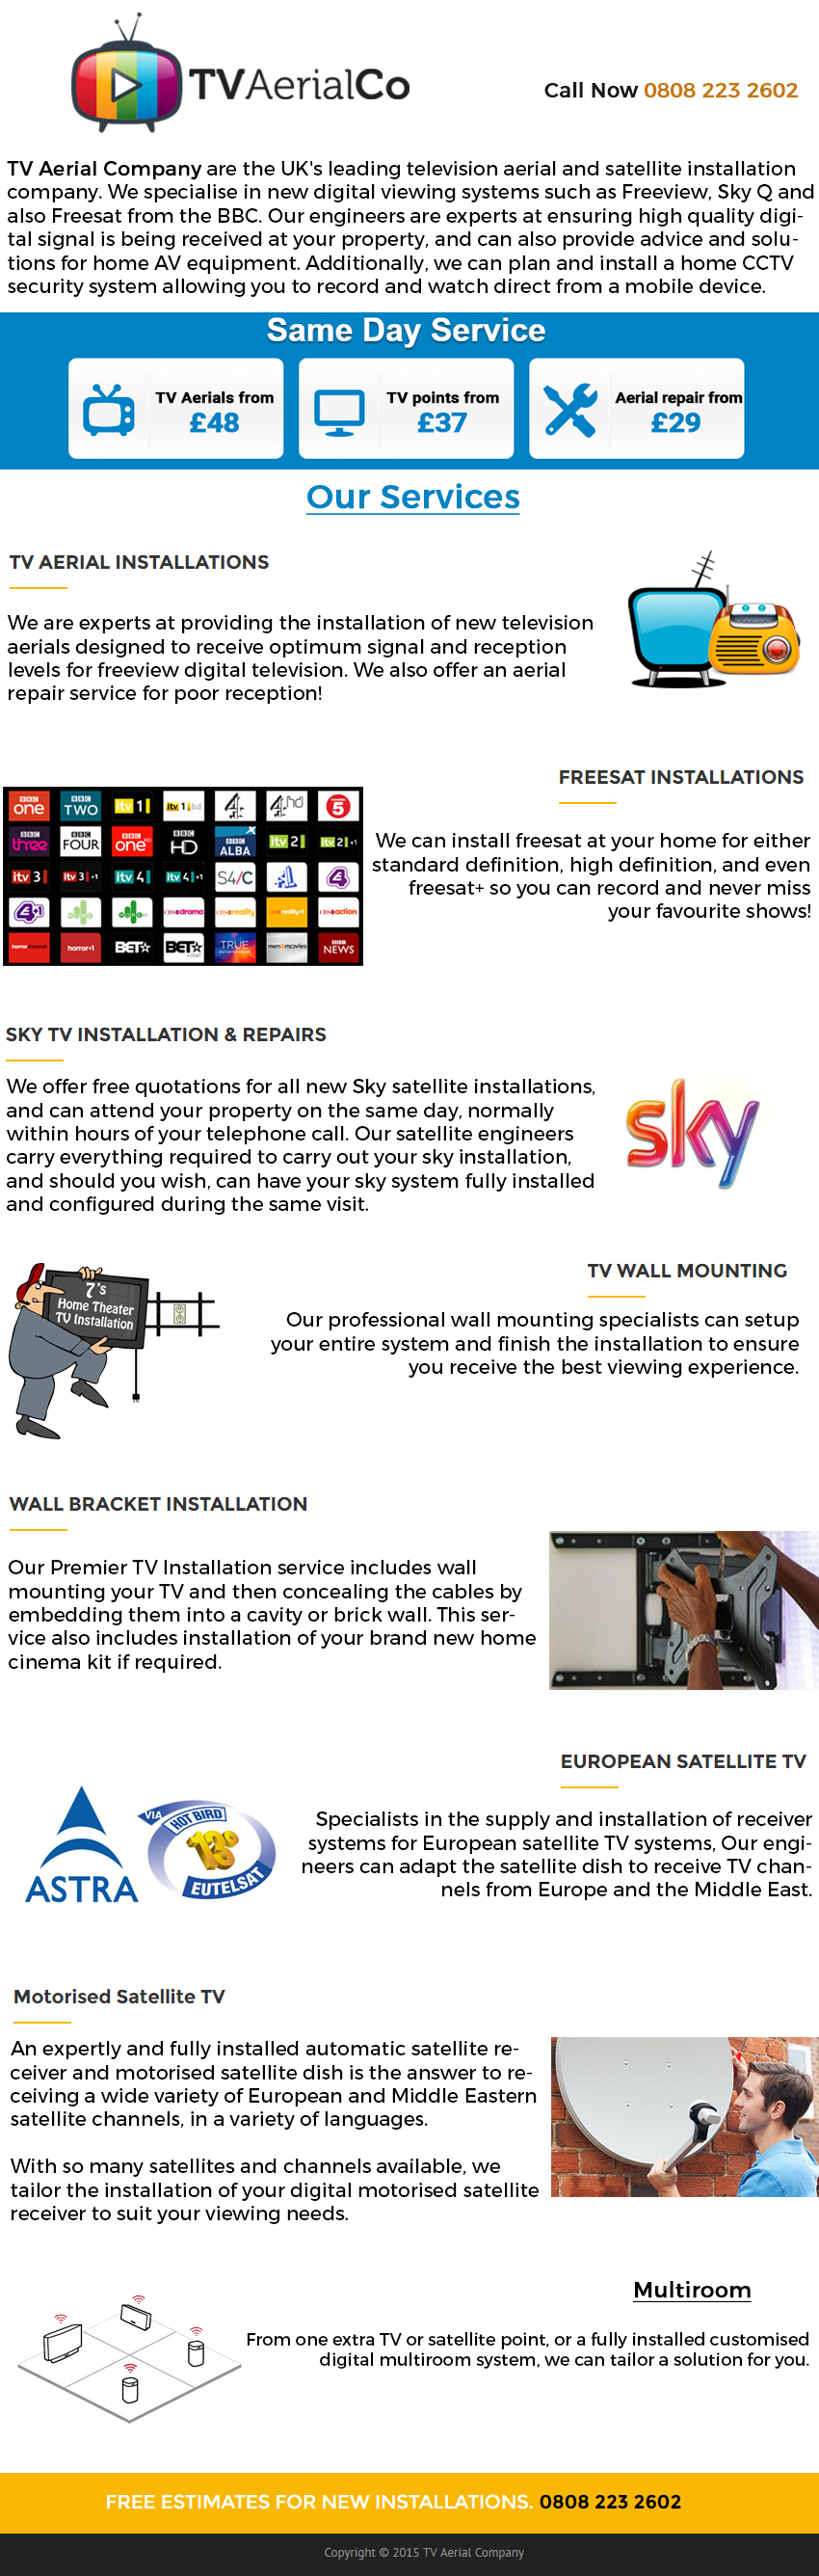 TV Aerial Company Infographics